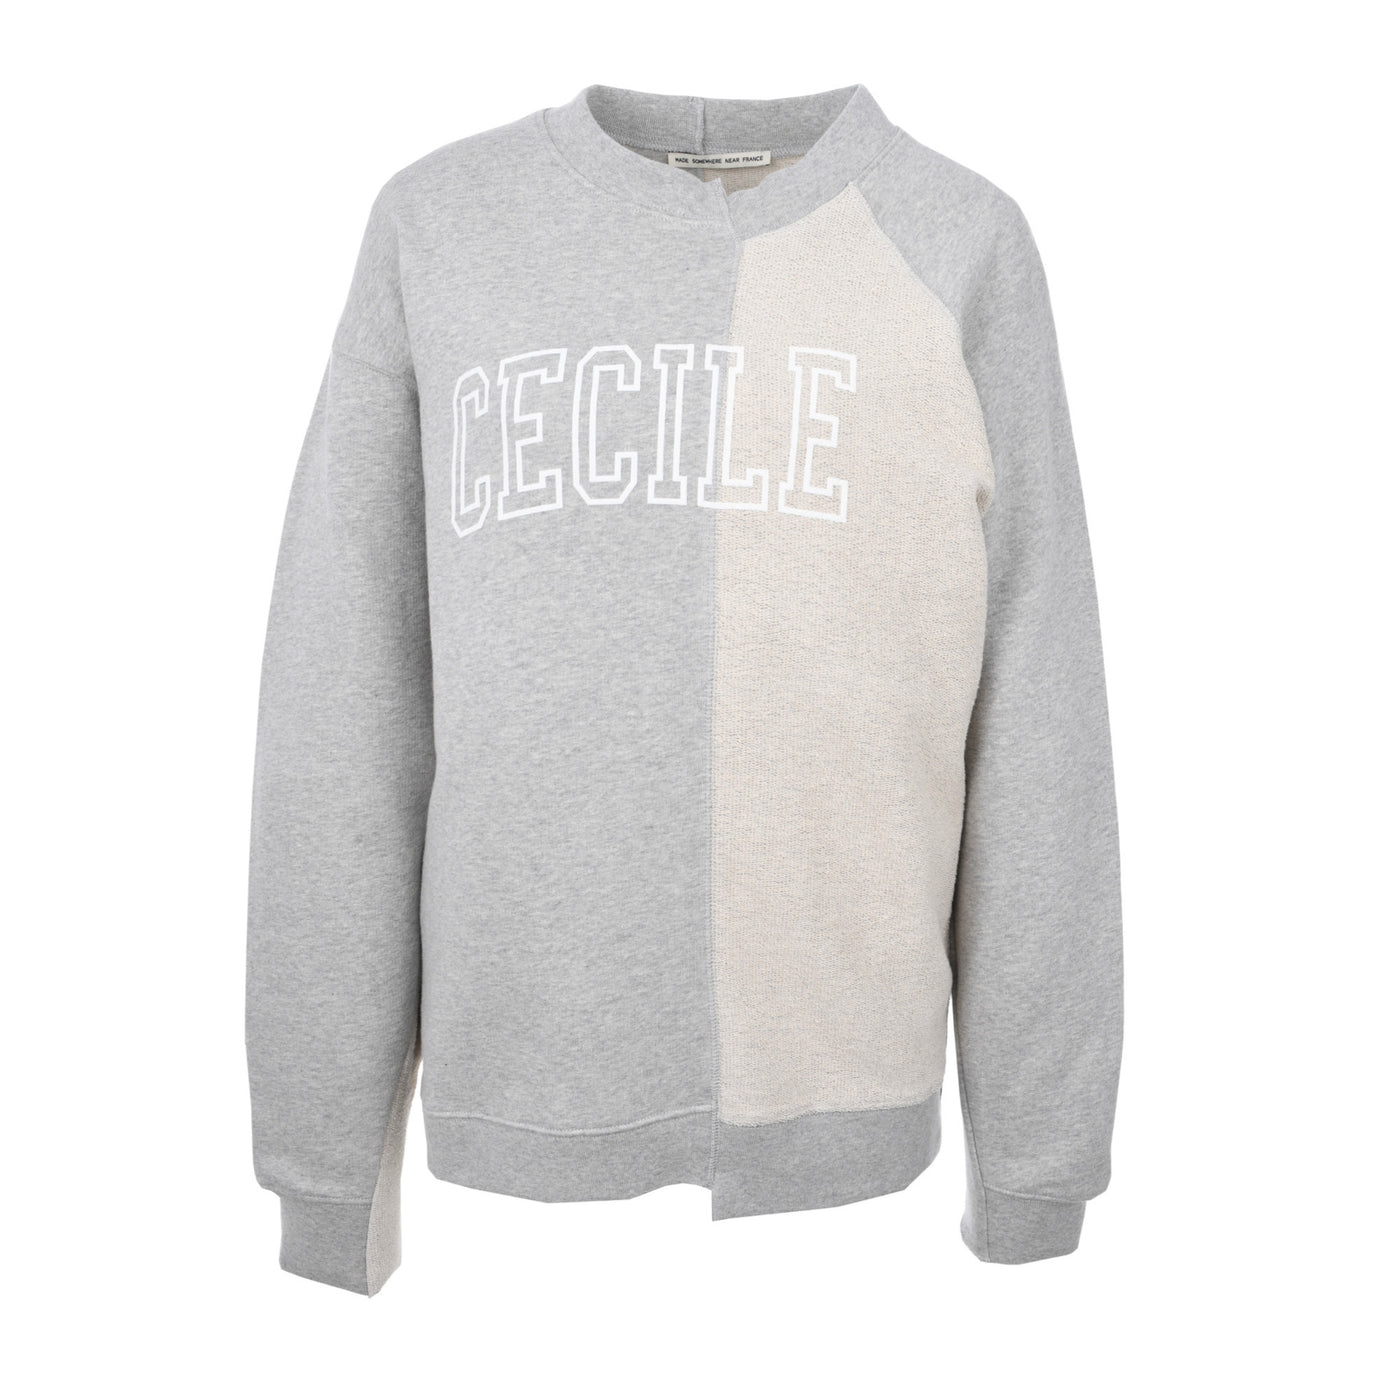 Cecile Varsity Deconstructed Sweatshirt